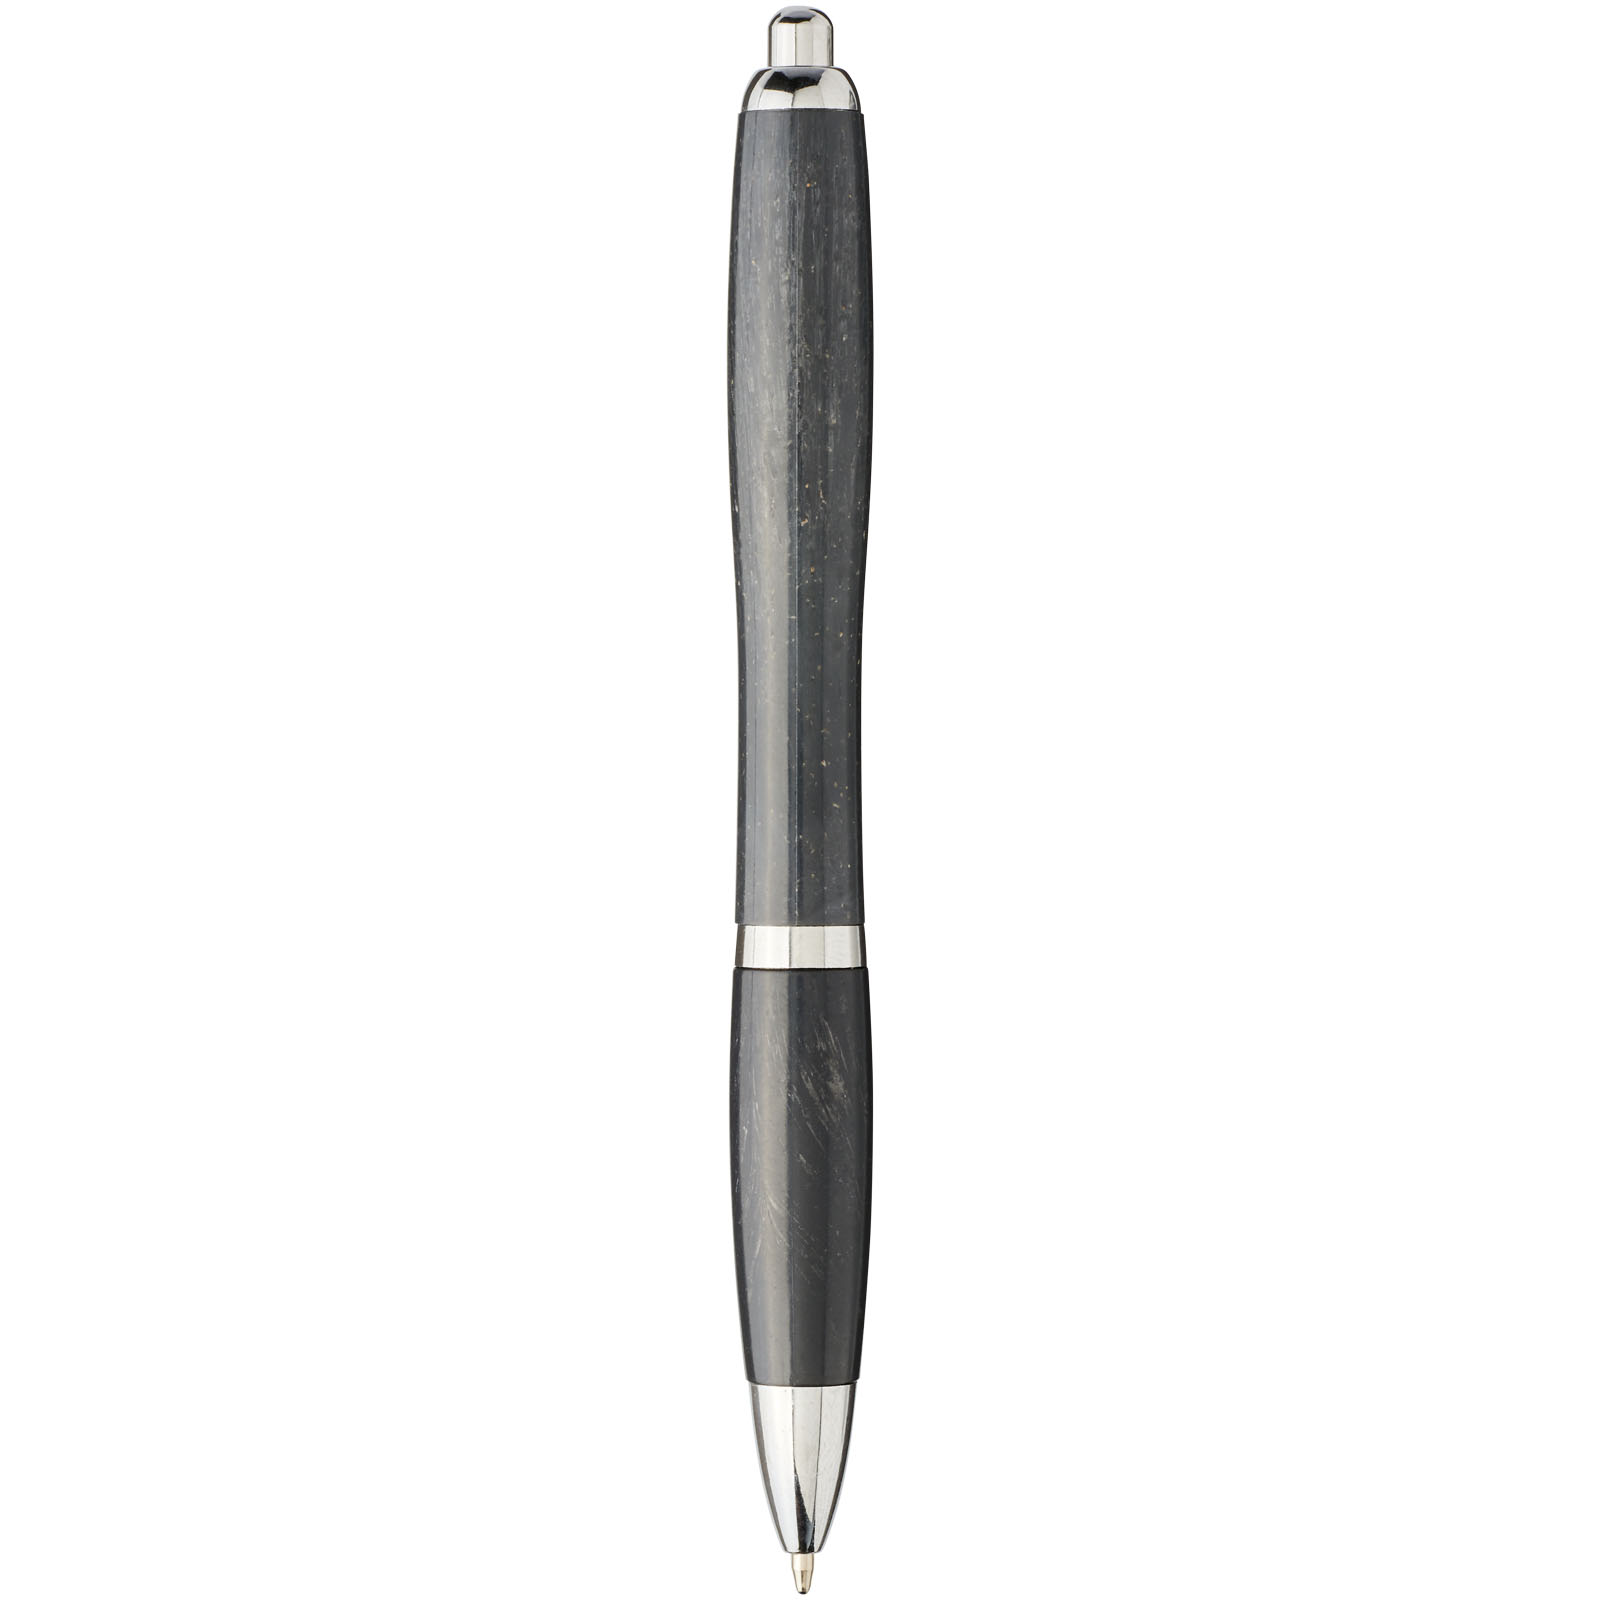 Advertising Ballpoint Pens - Nash wheat straw chrome tip ballpoint pen - 2